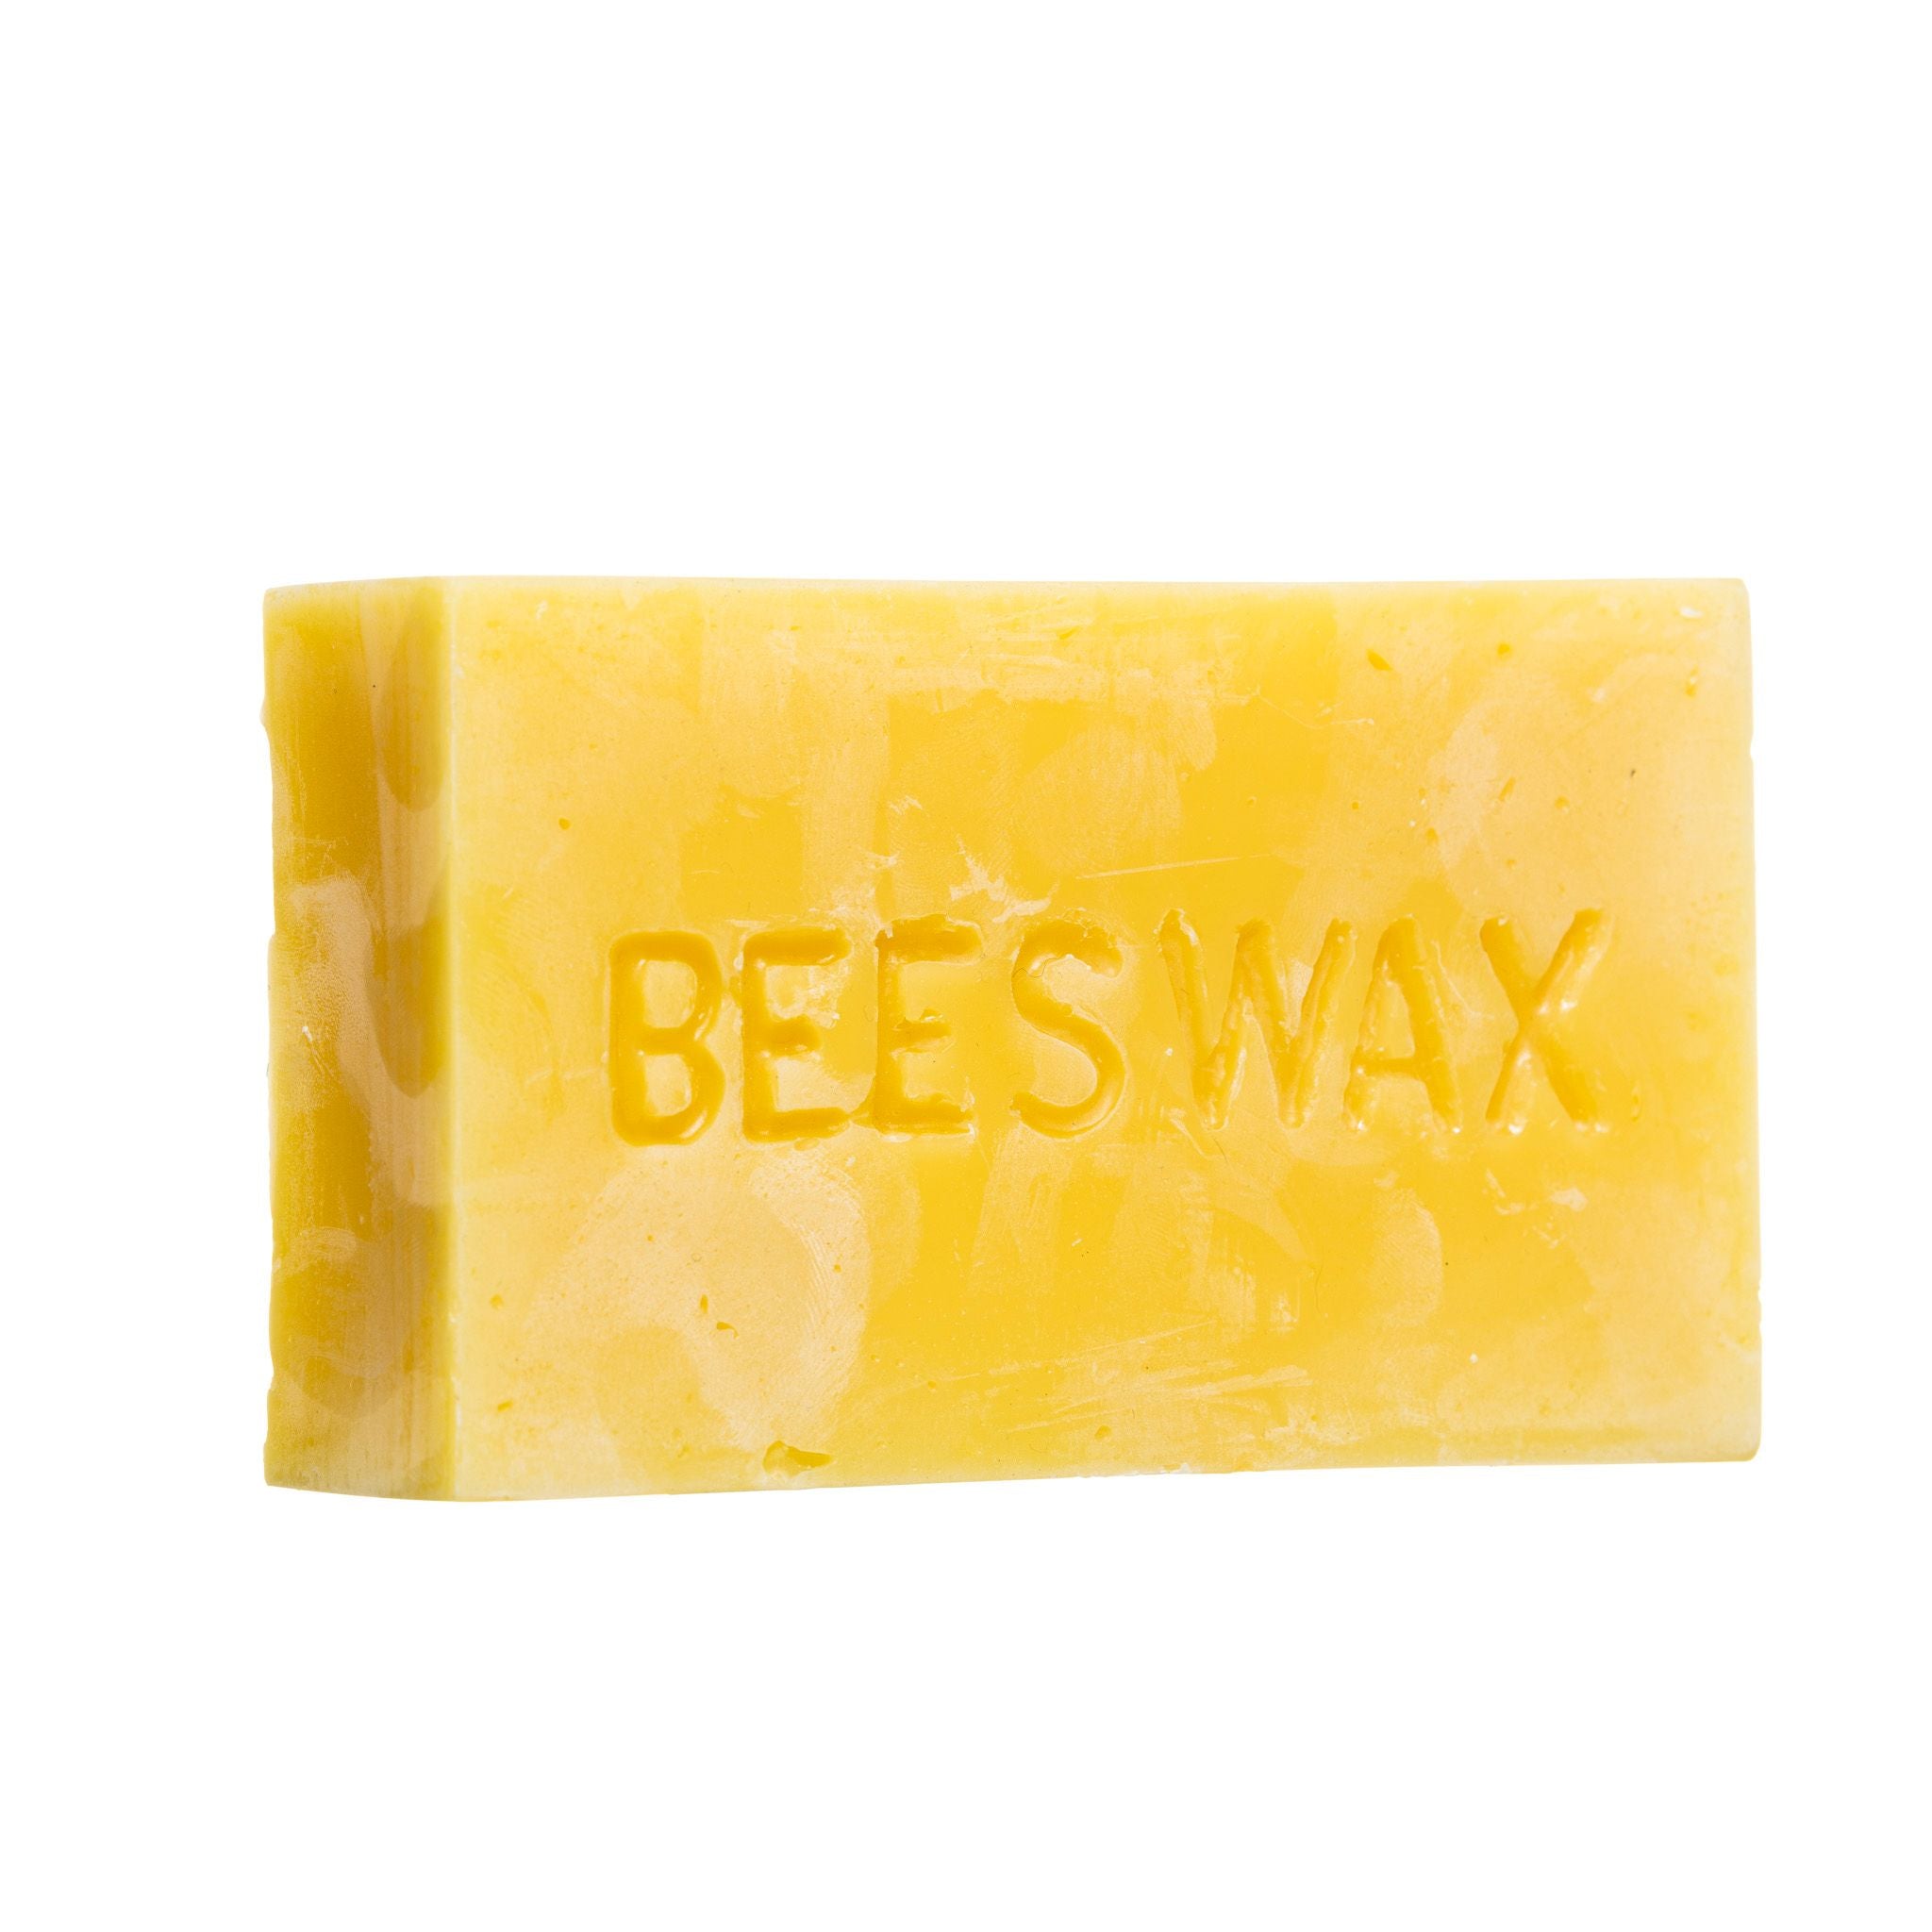 Beeswax Block - Woodlark Shop